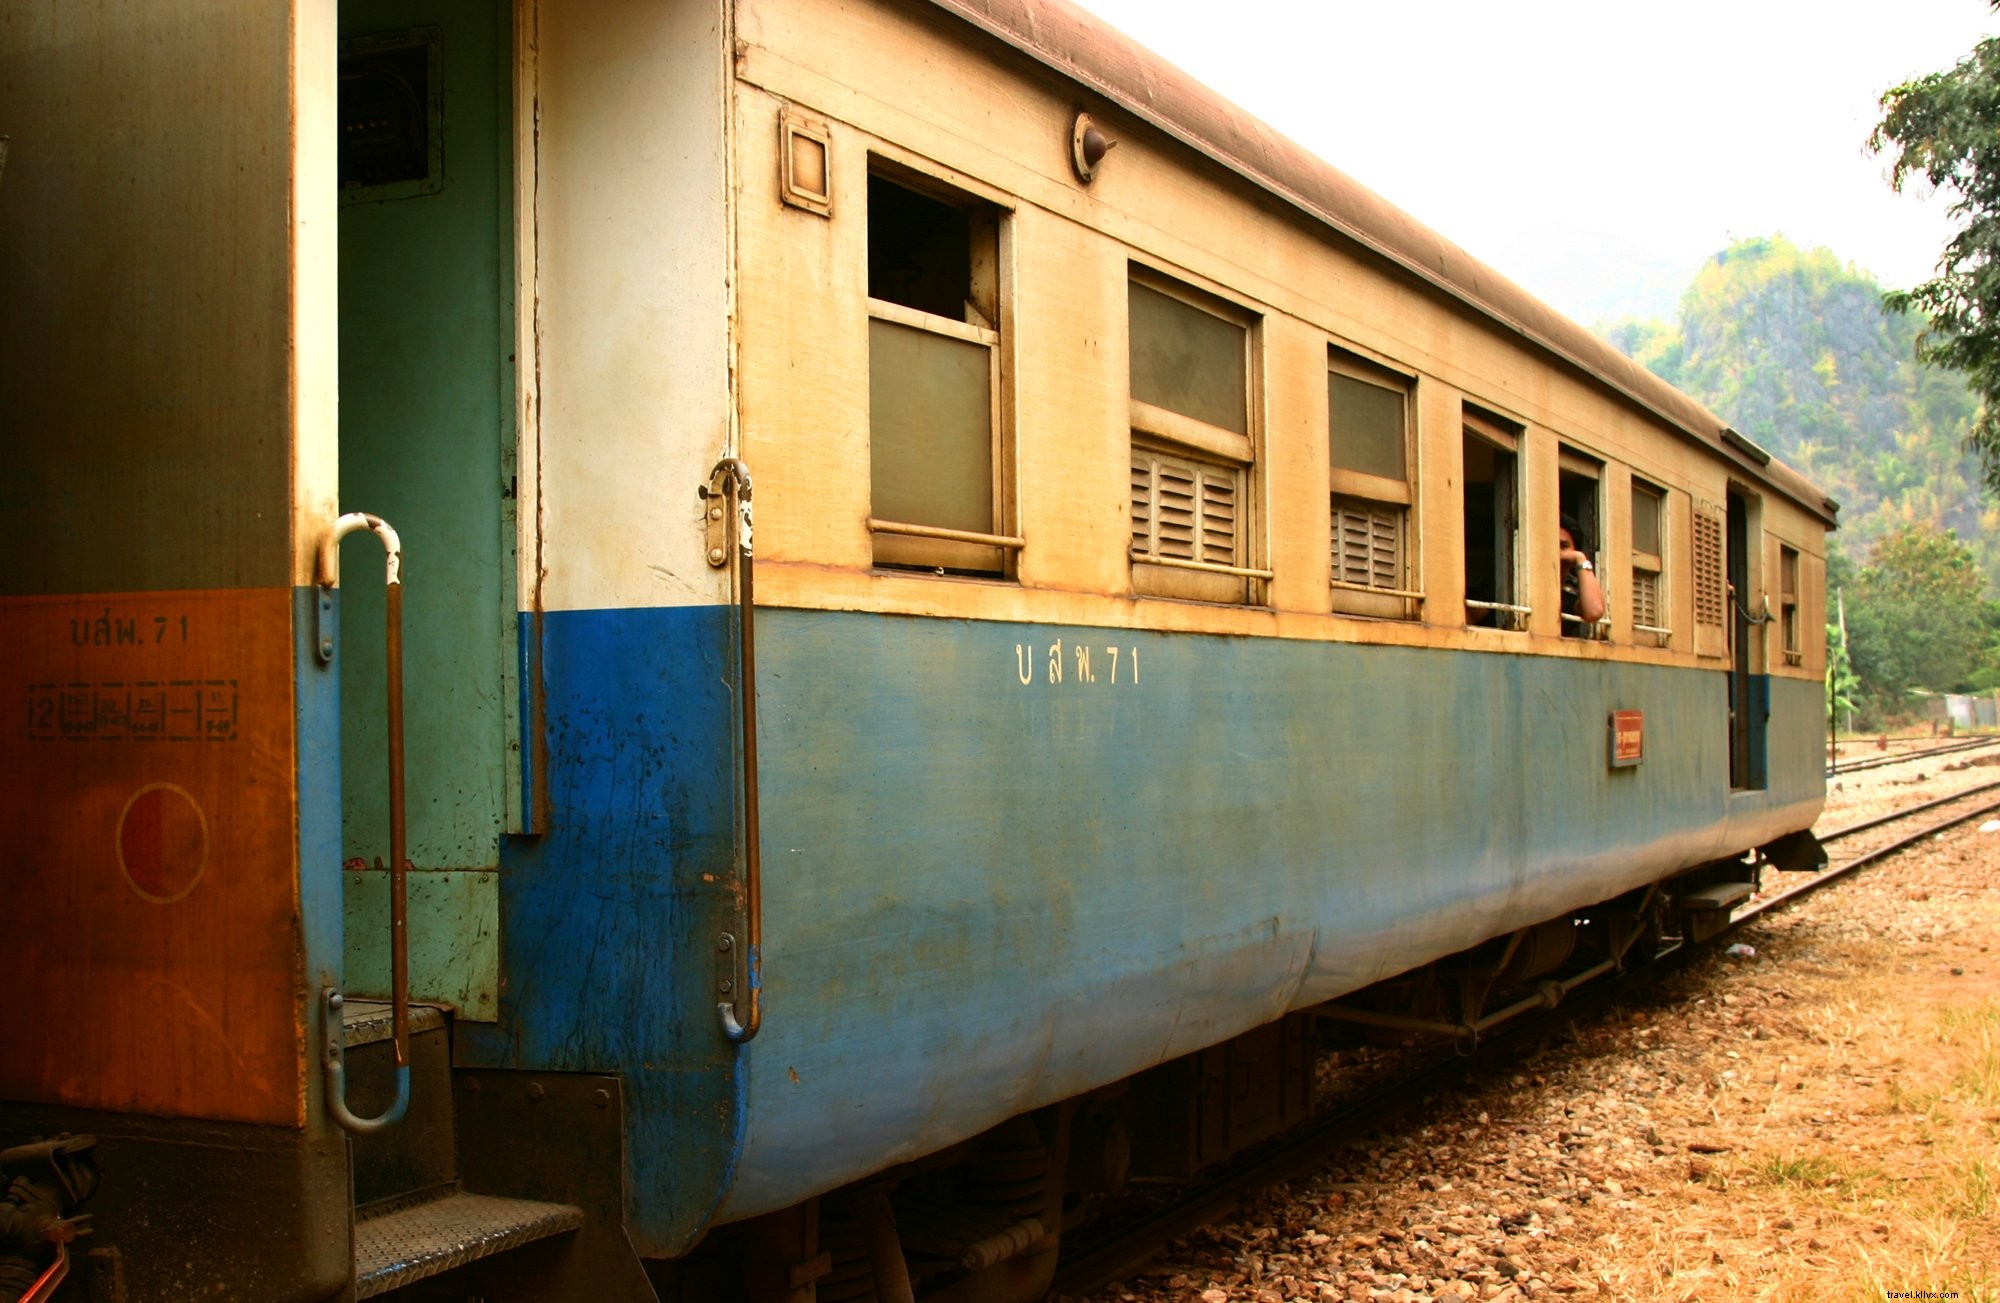 Foto de vagón de tren vintage